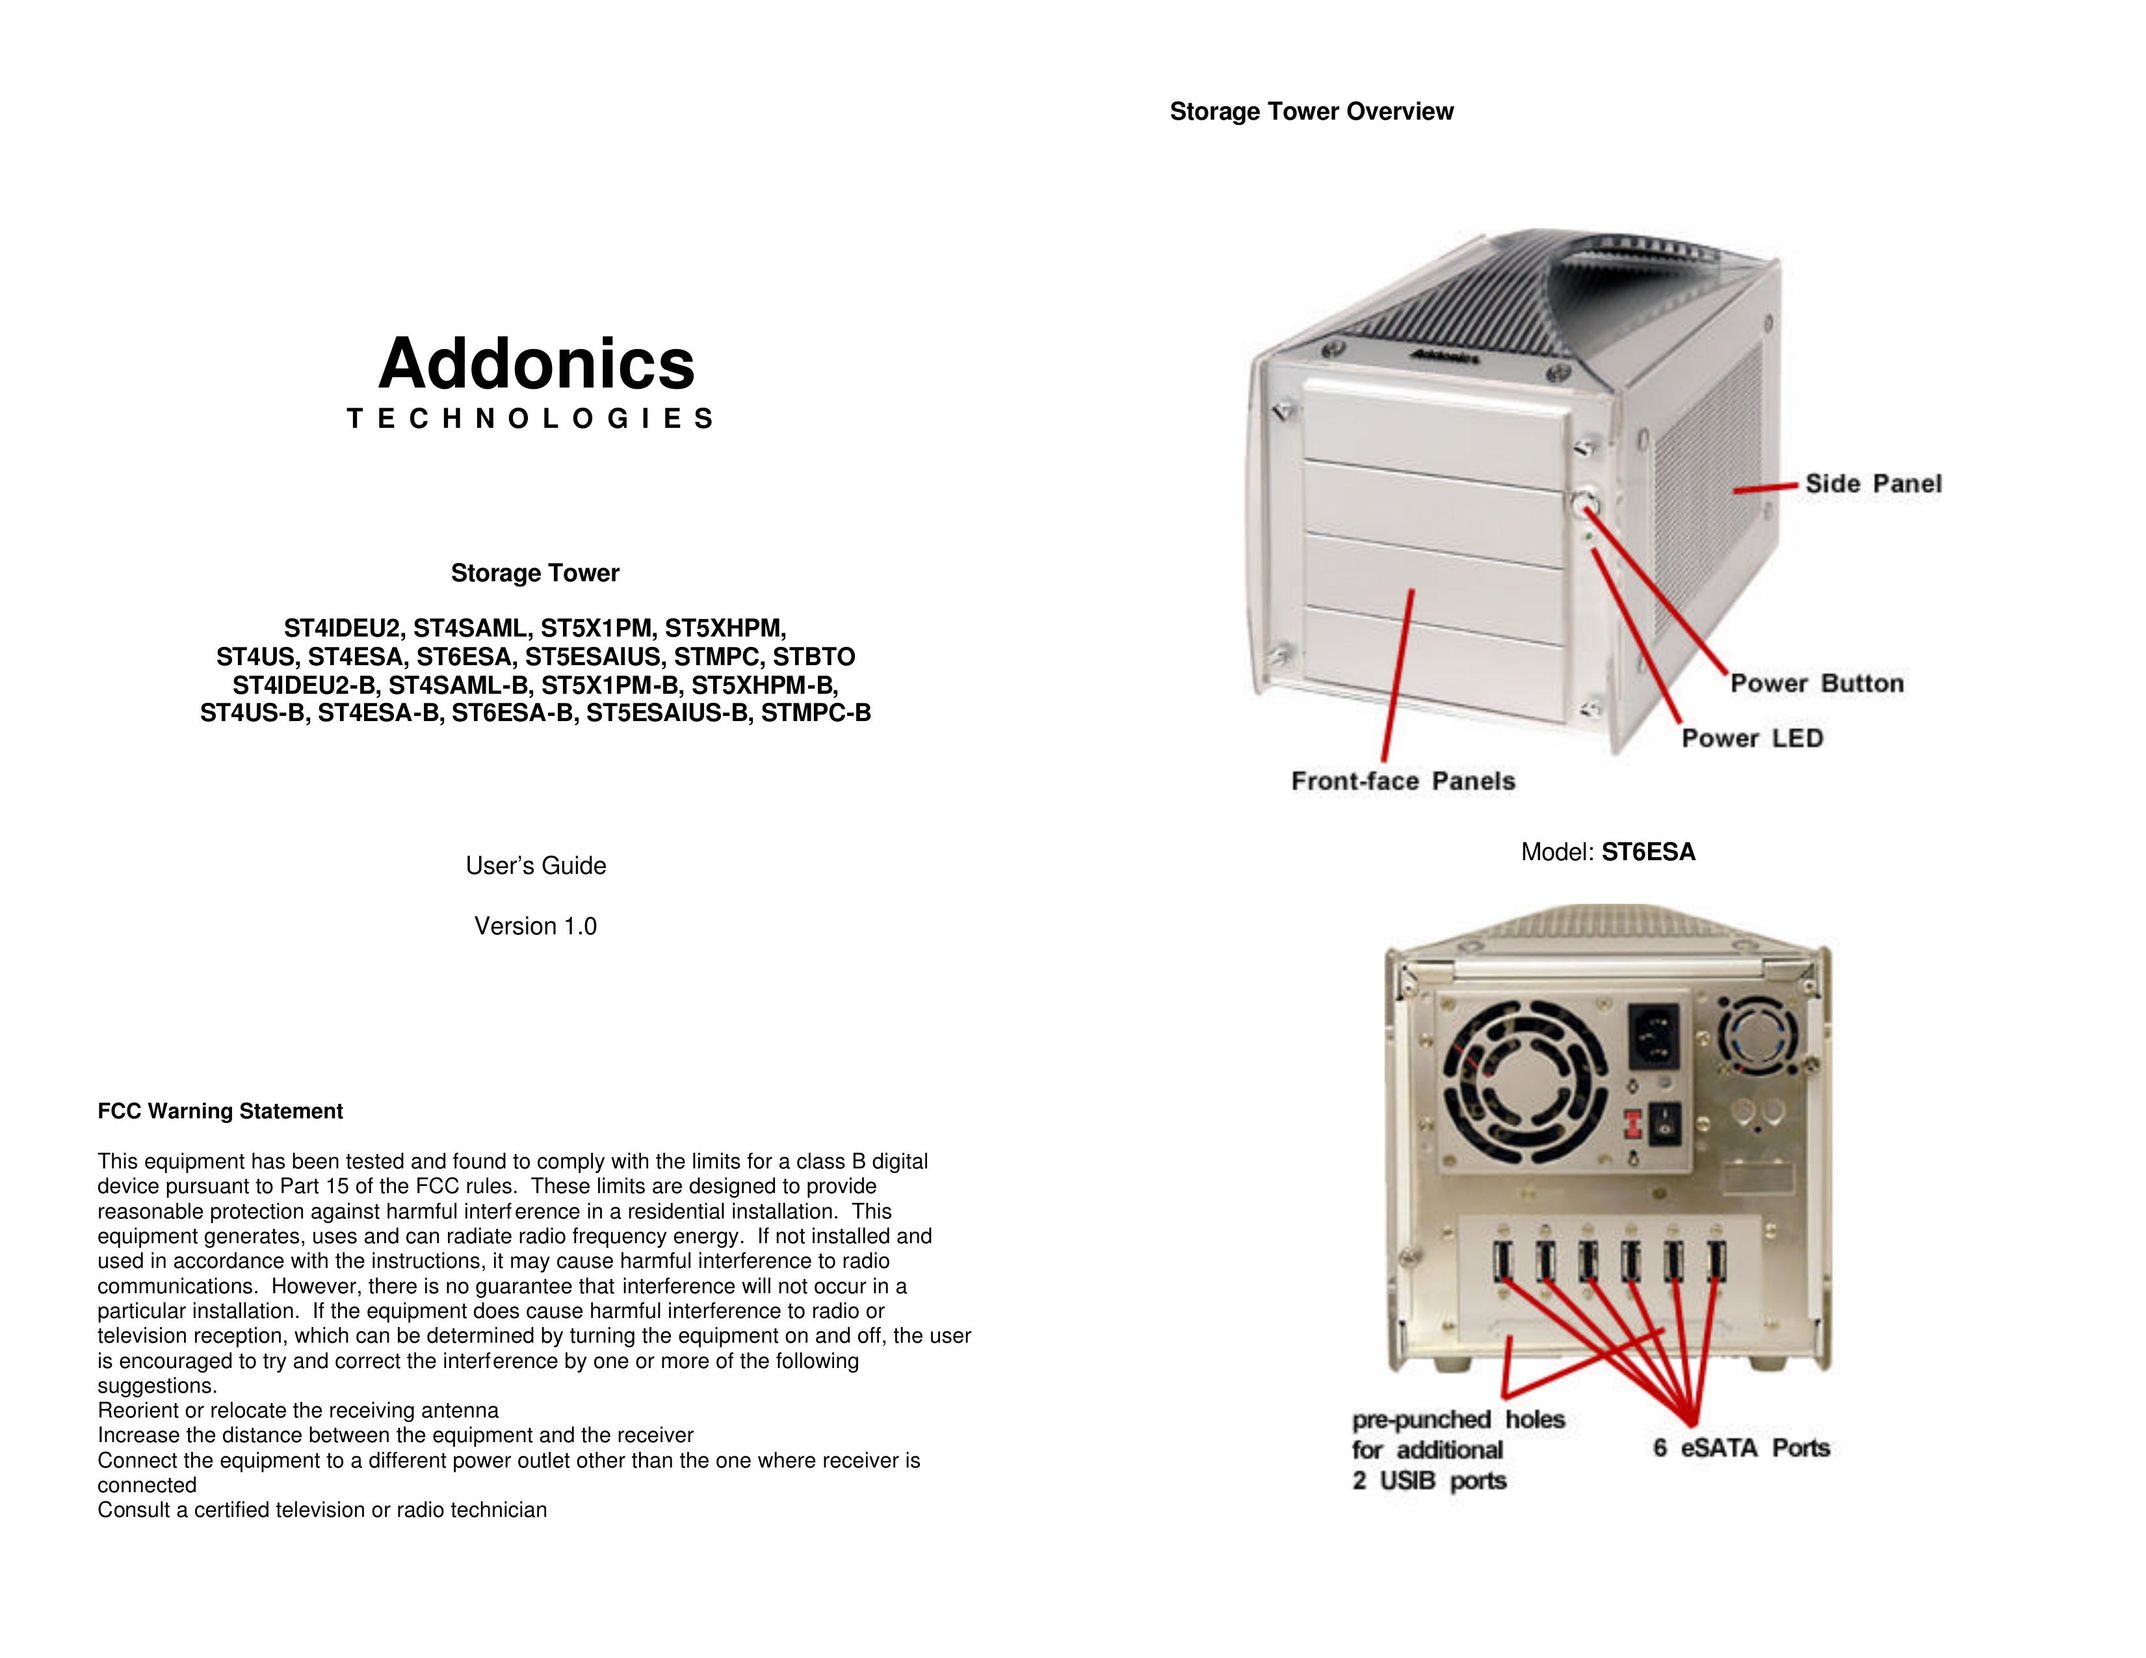 Addonics Technologies ST5X1PM Portable Media Storage User Manual